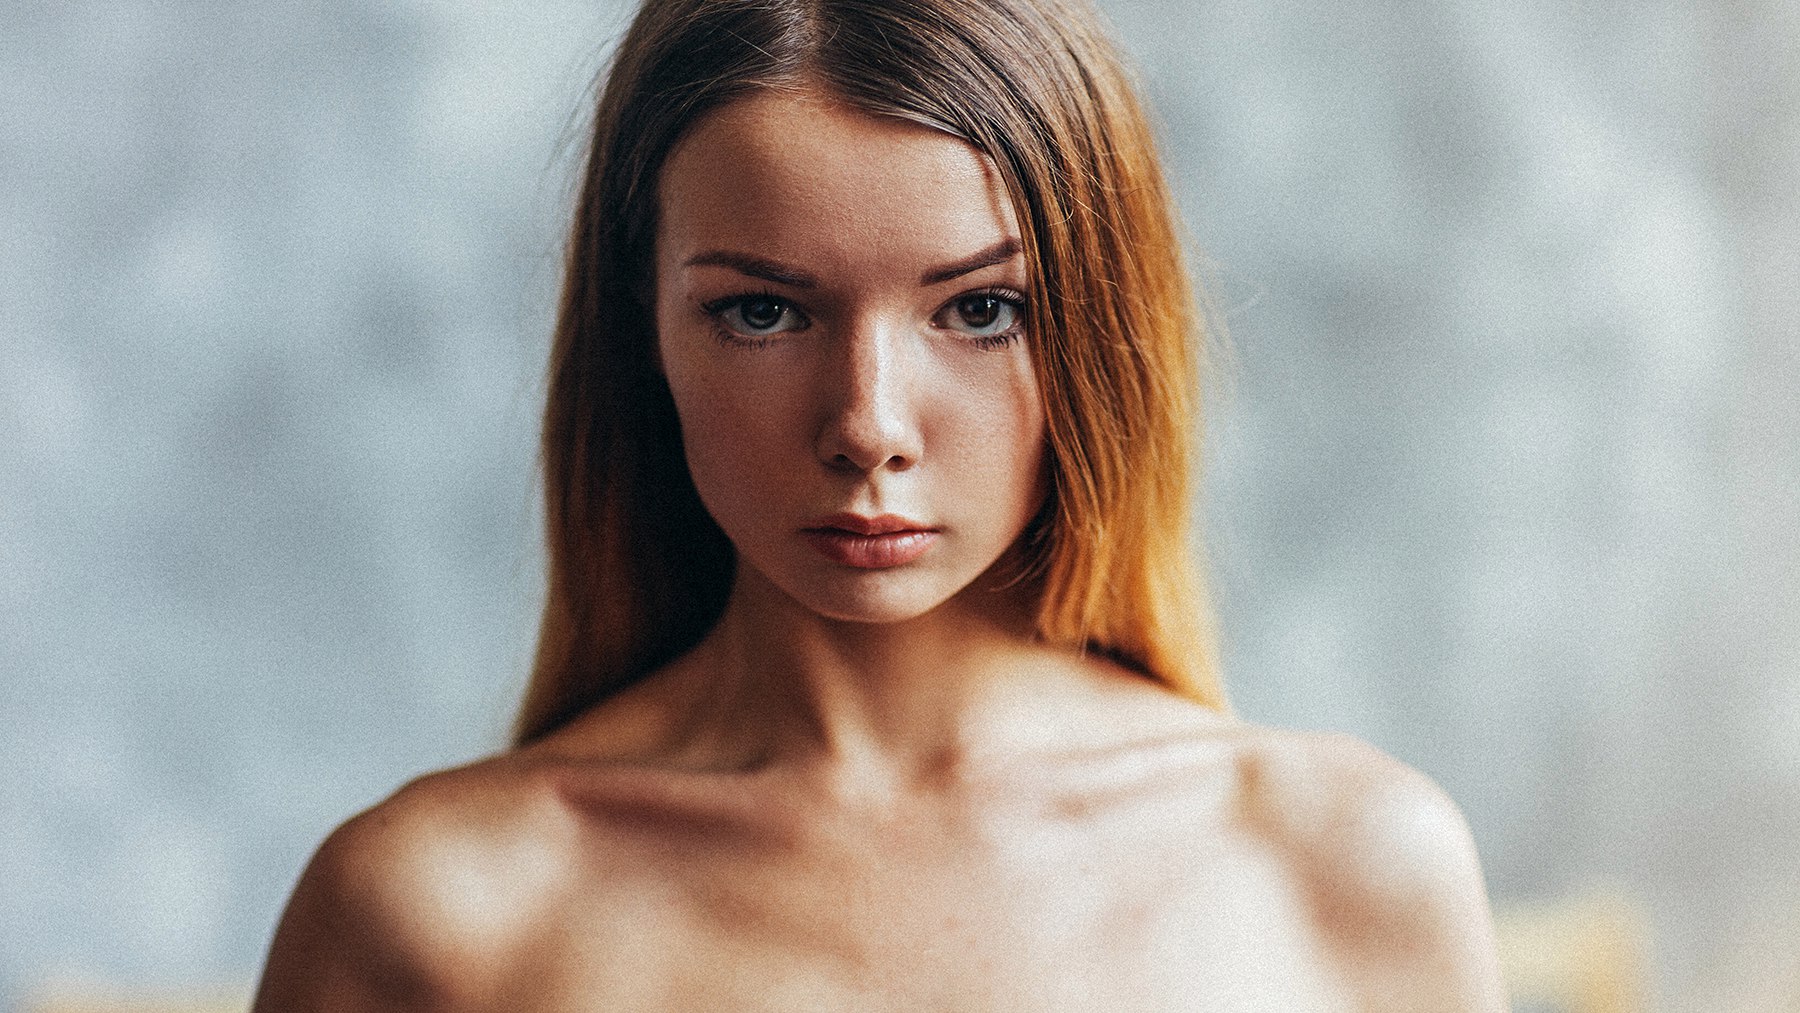 People 1800x1013 Venera Gudkova women bare shoulders film grain simple background face portrait closeup